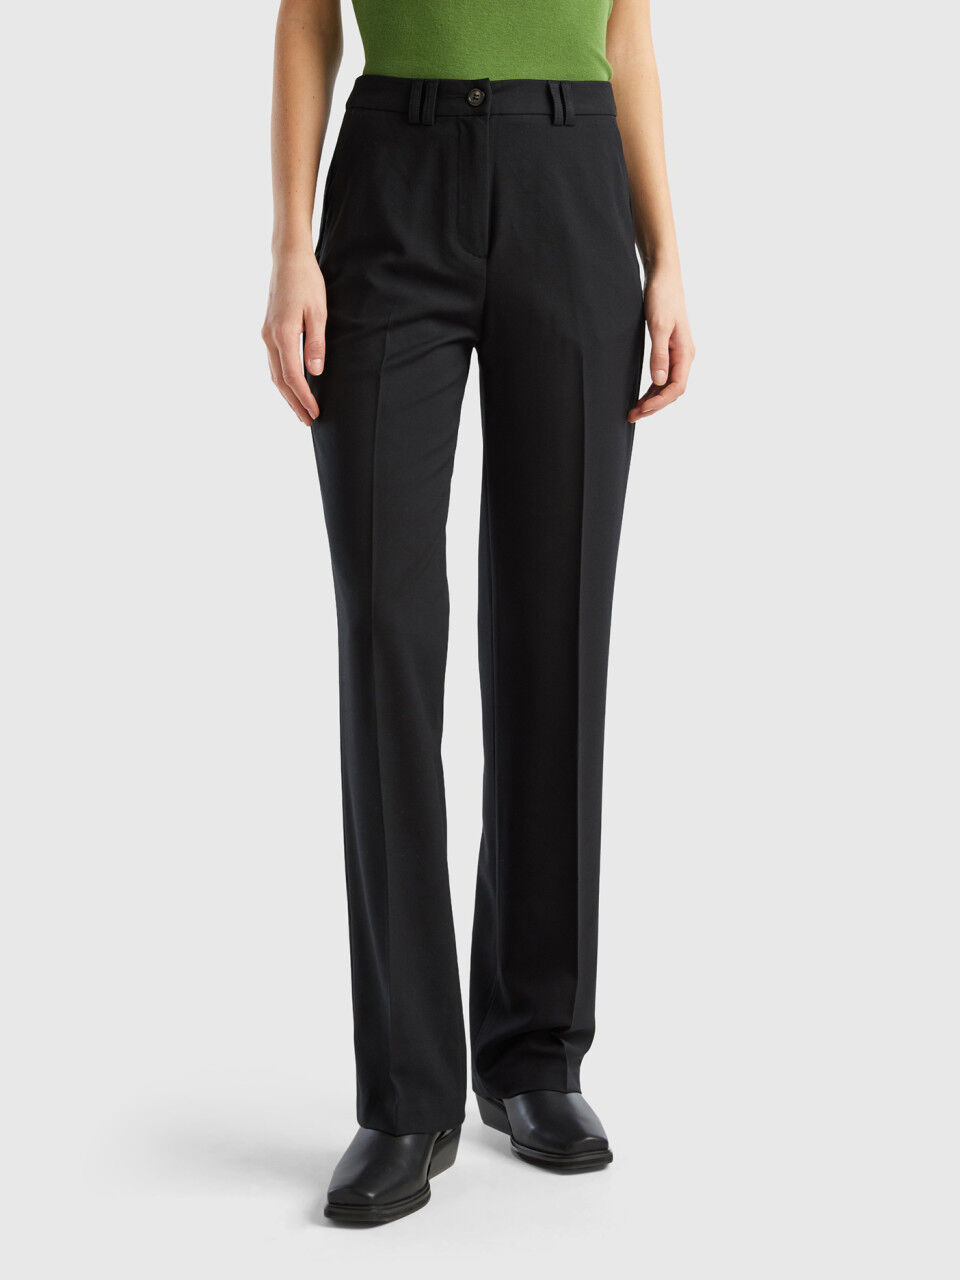 Kick It Grey High-Waisted Trouser Pants | Moda ropa de trabajo, Ropa de  moda, Combinar ropa mujer